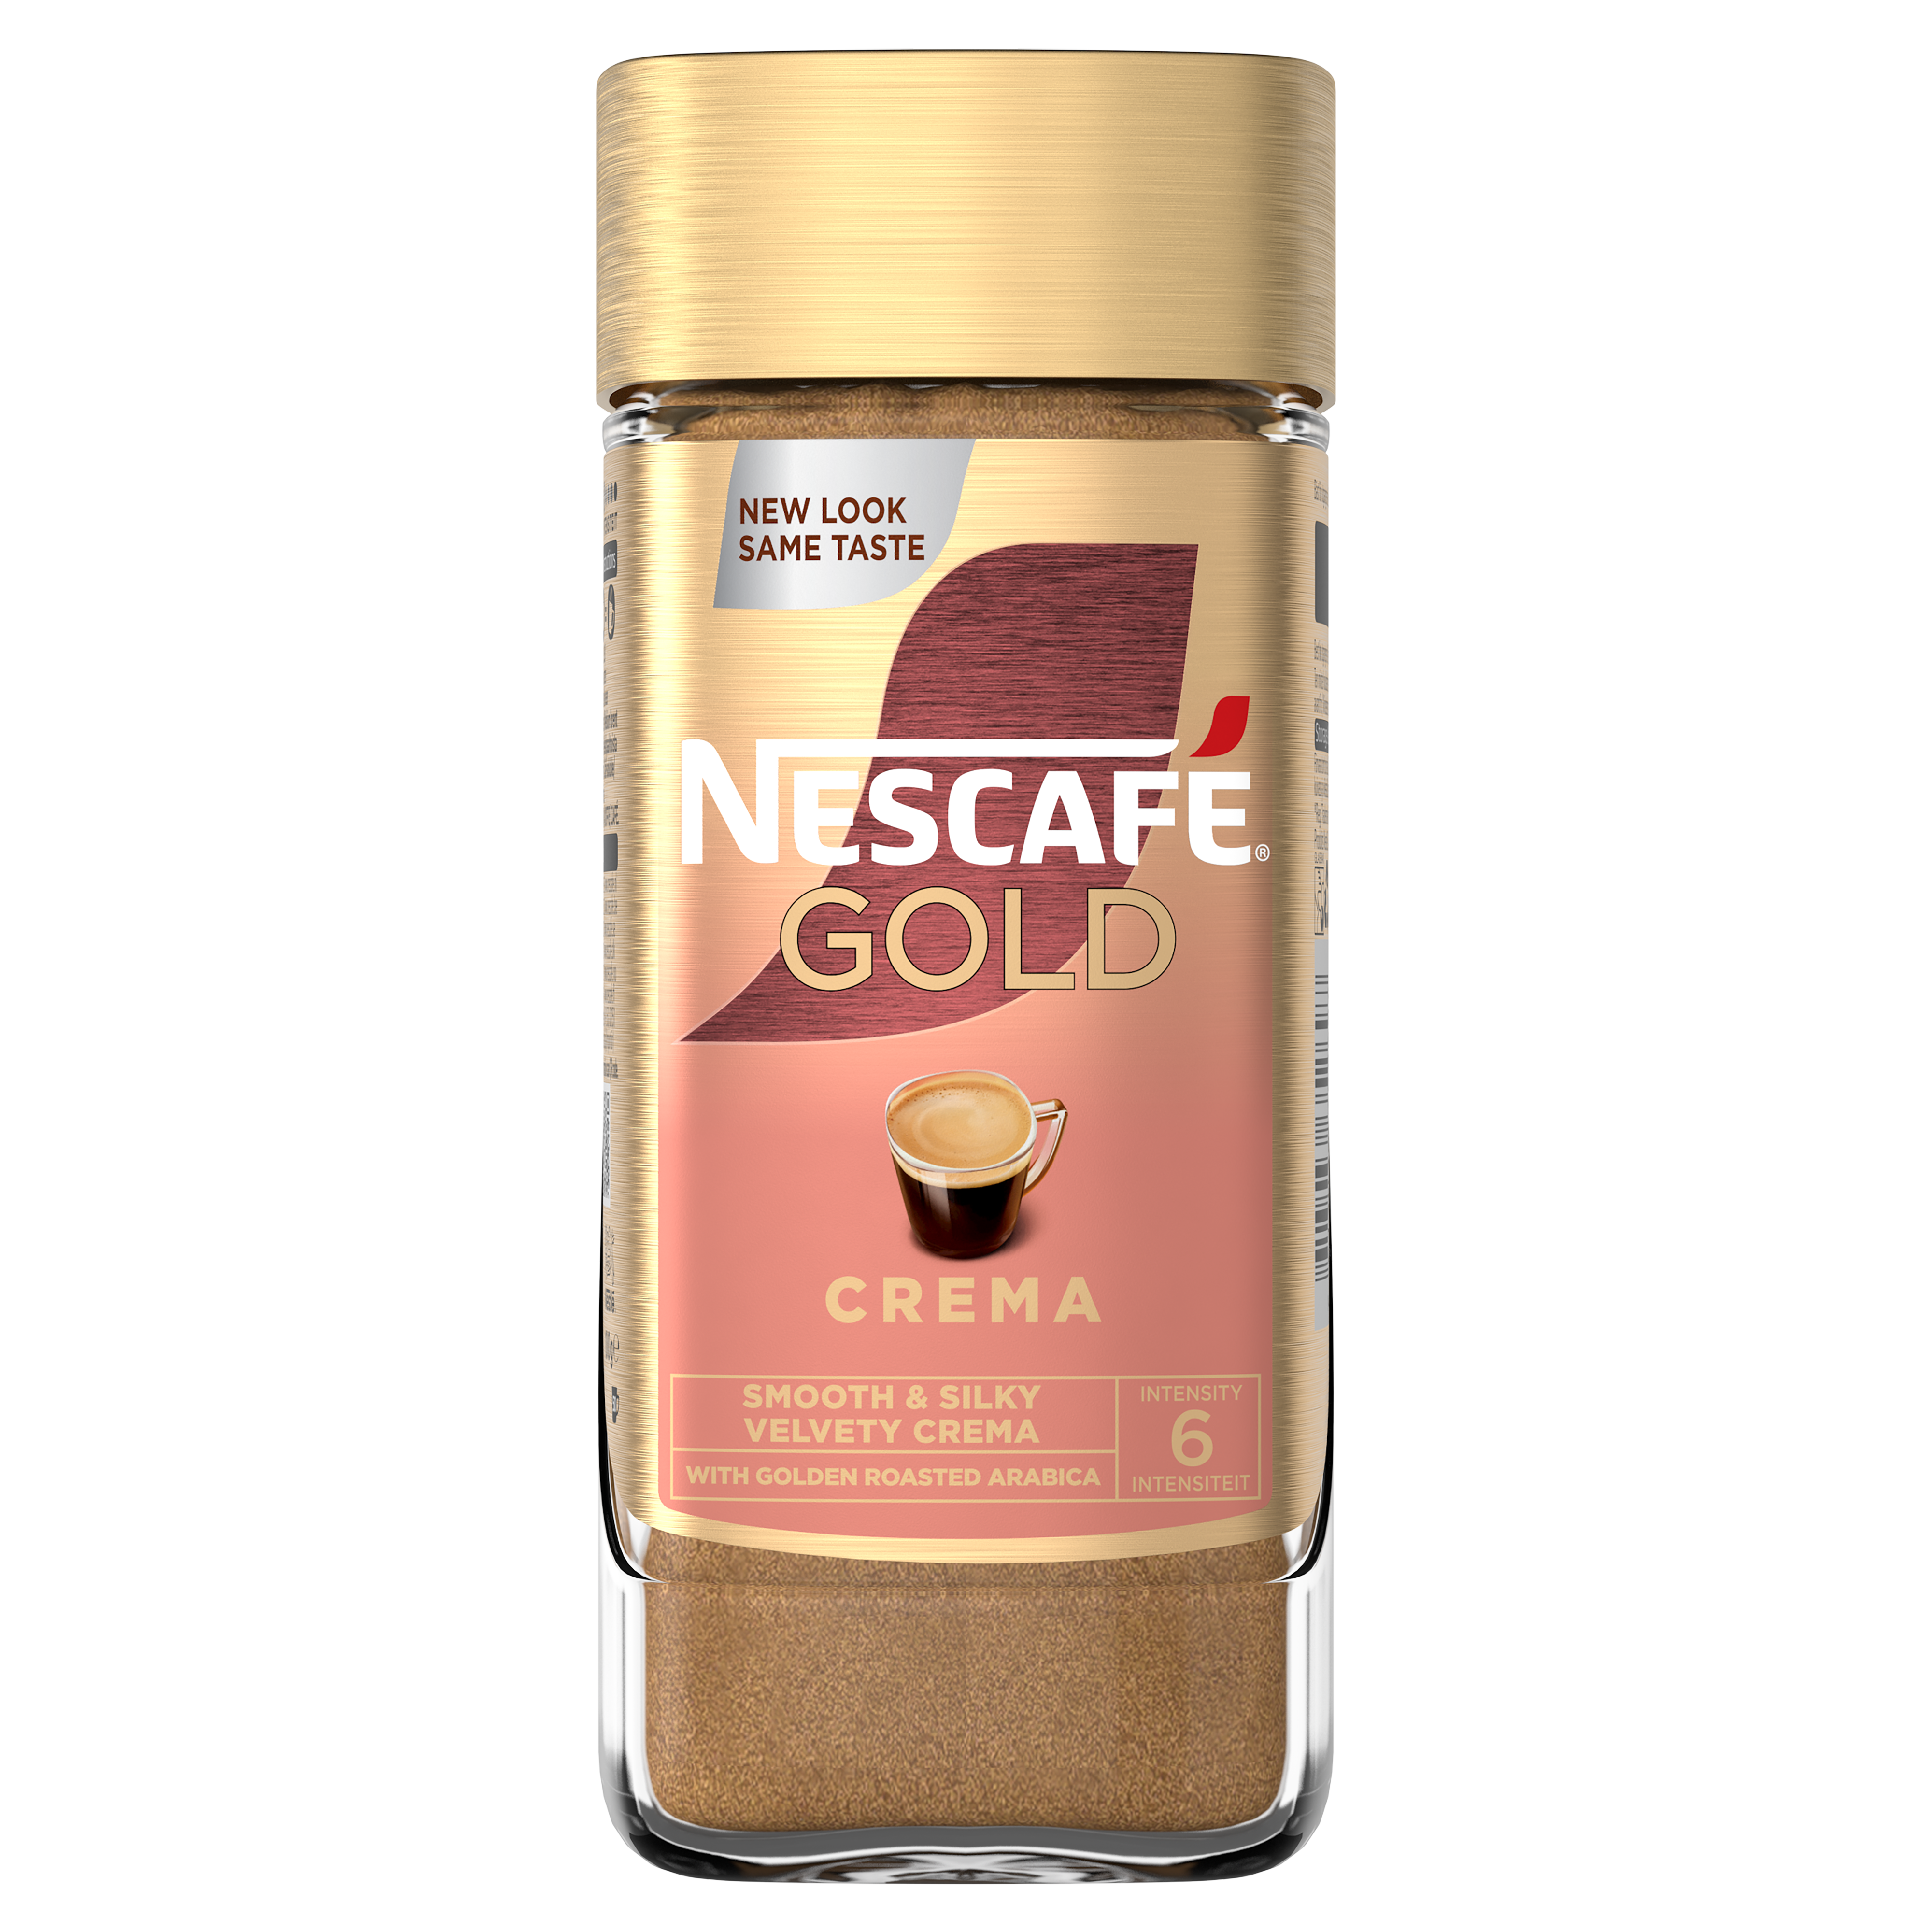 Nescafé Gold crema coffee